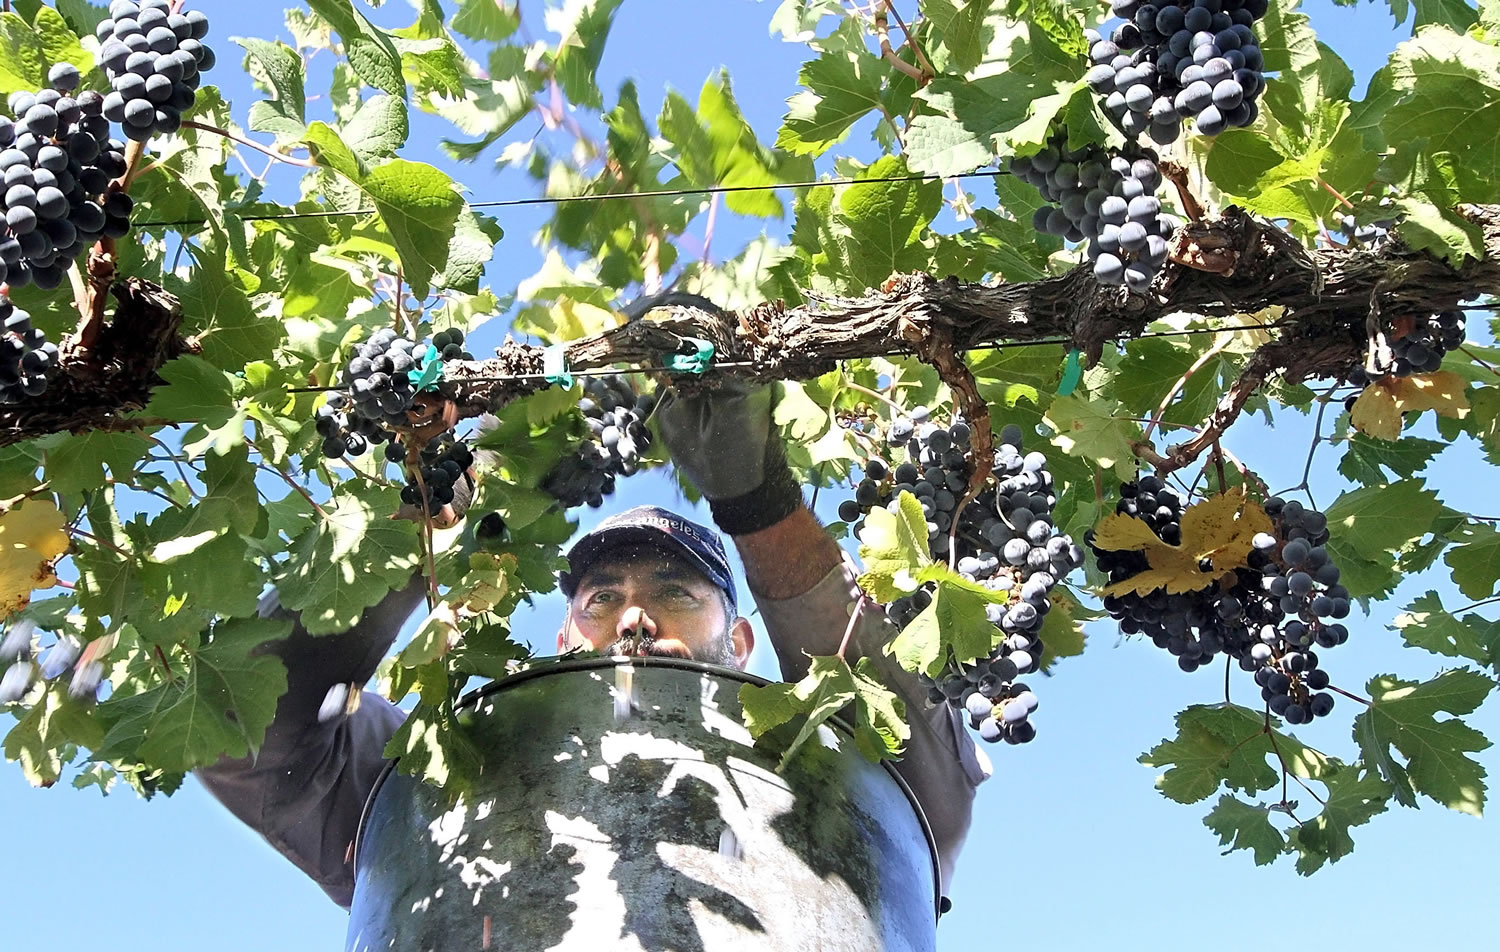 Jesus Godinez of Grandview picks Merlot wine grapes on Thursday at the Klipsun Vineyards on Red Mountain near Benton City.